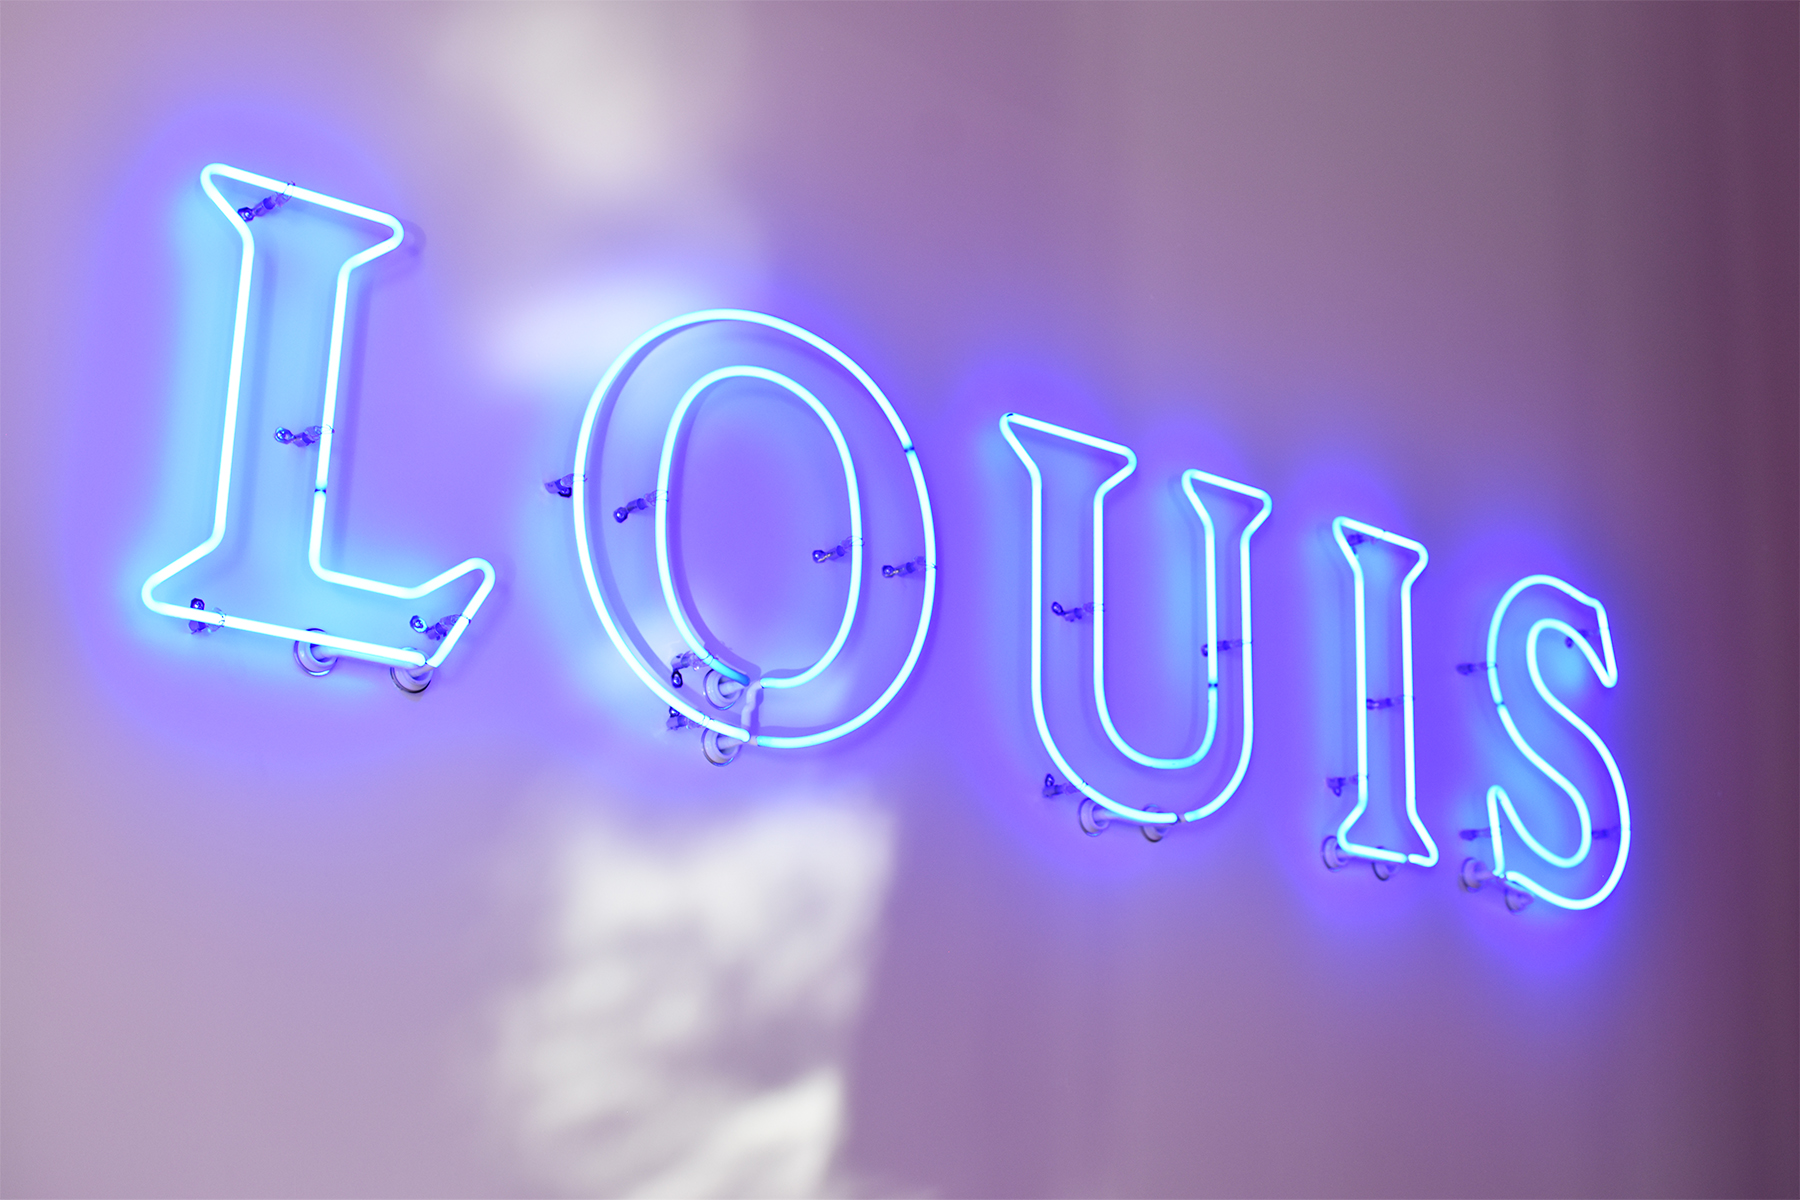 Louis Vuitton Exhibition